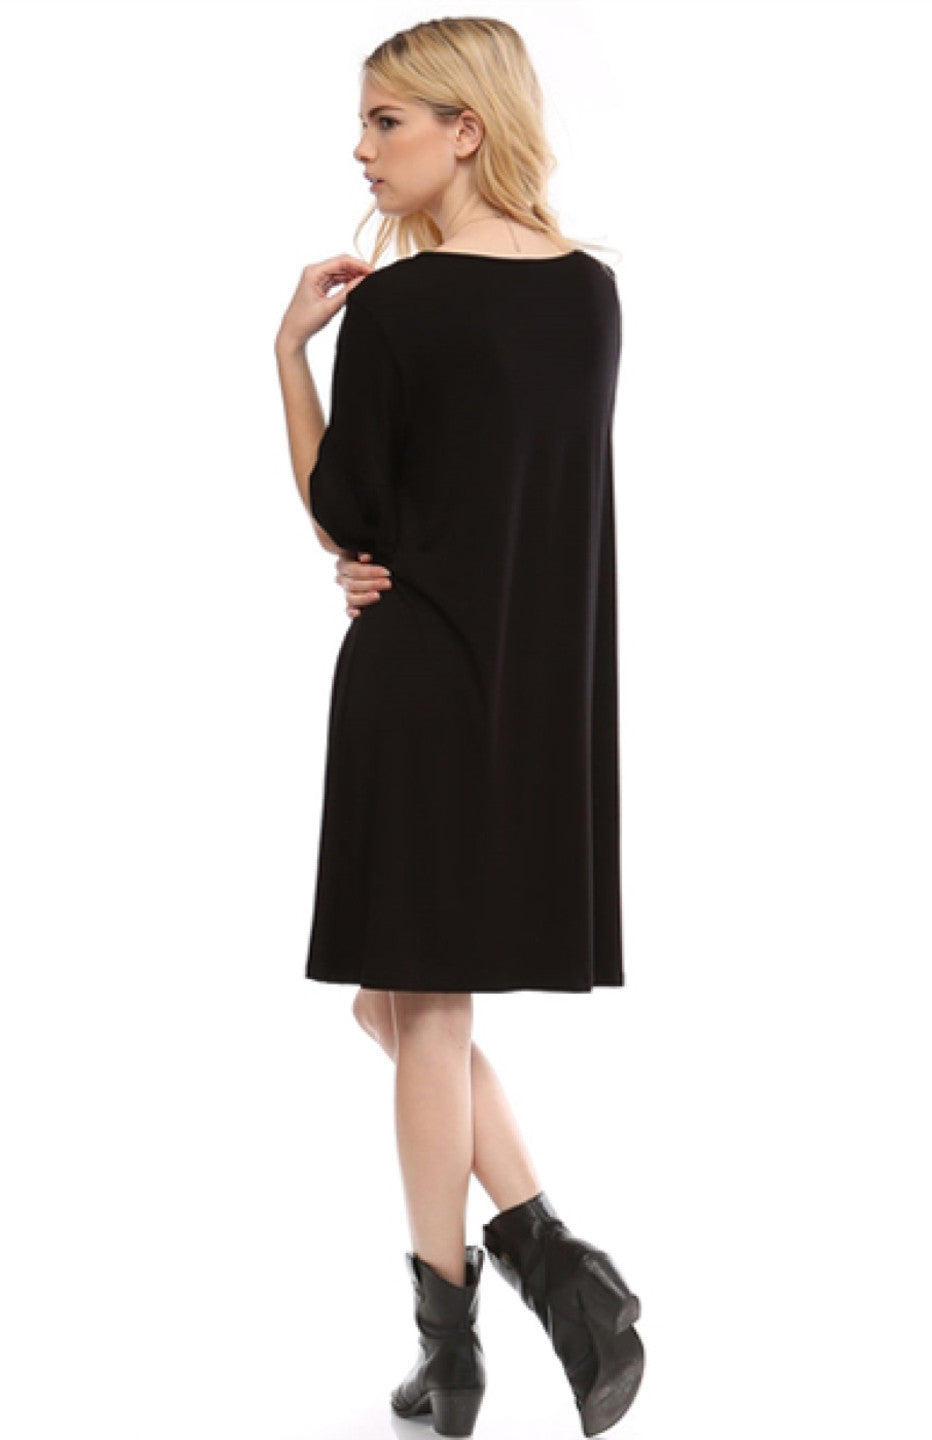 Fashion Store BodiLove Dress Tunic Oversize 3/4 Bell Sleeve –